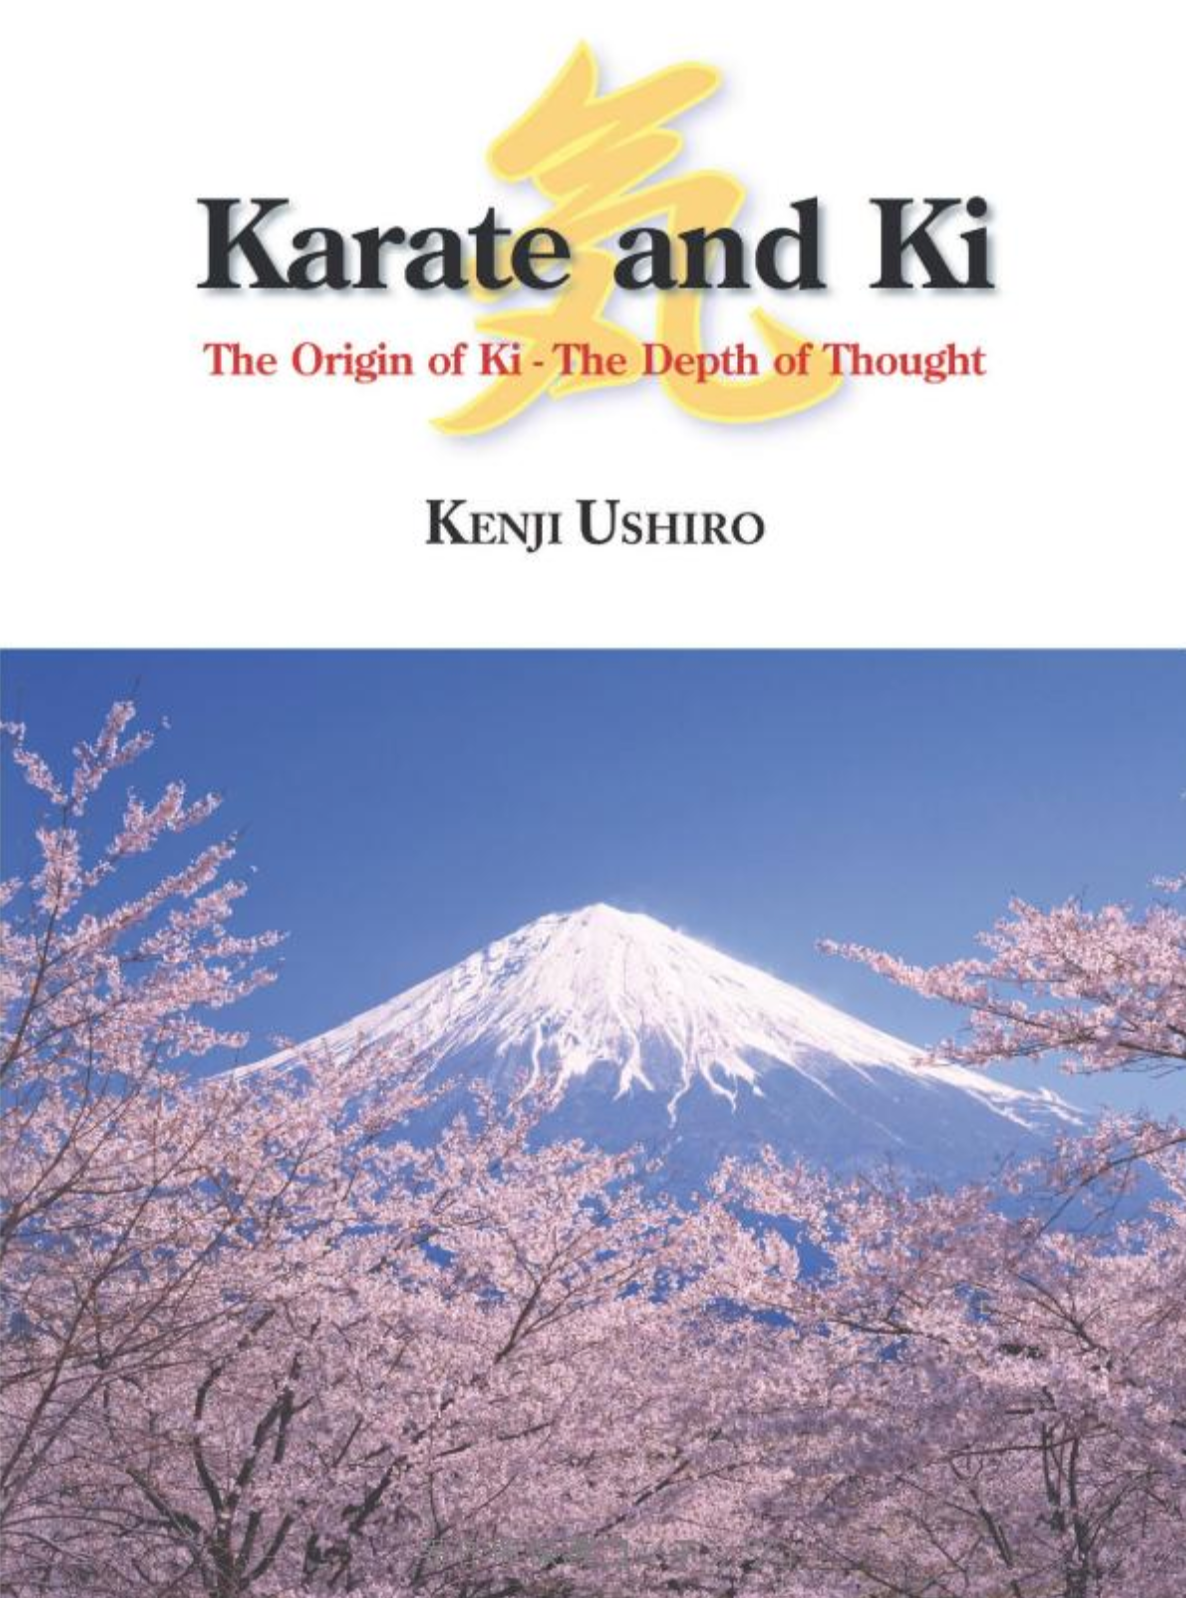 Karate and Ki −The Origin of Ki - The Depth of Thought Book by Kenji Ushiro - Budovideos